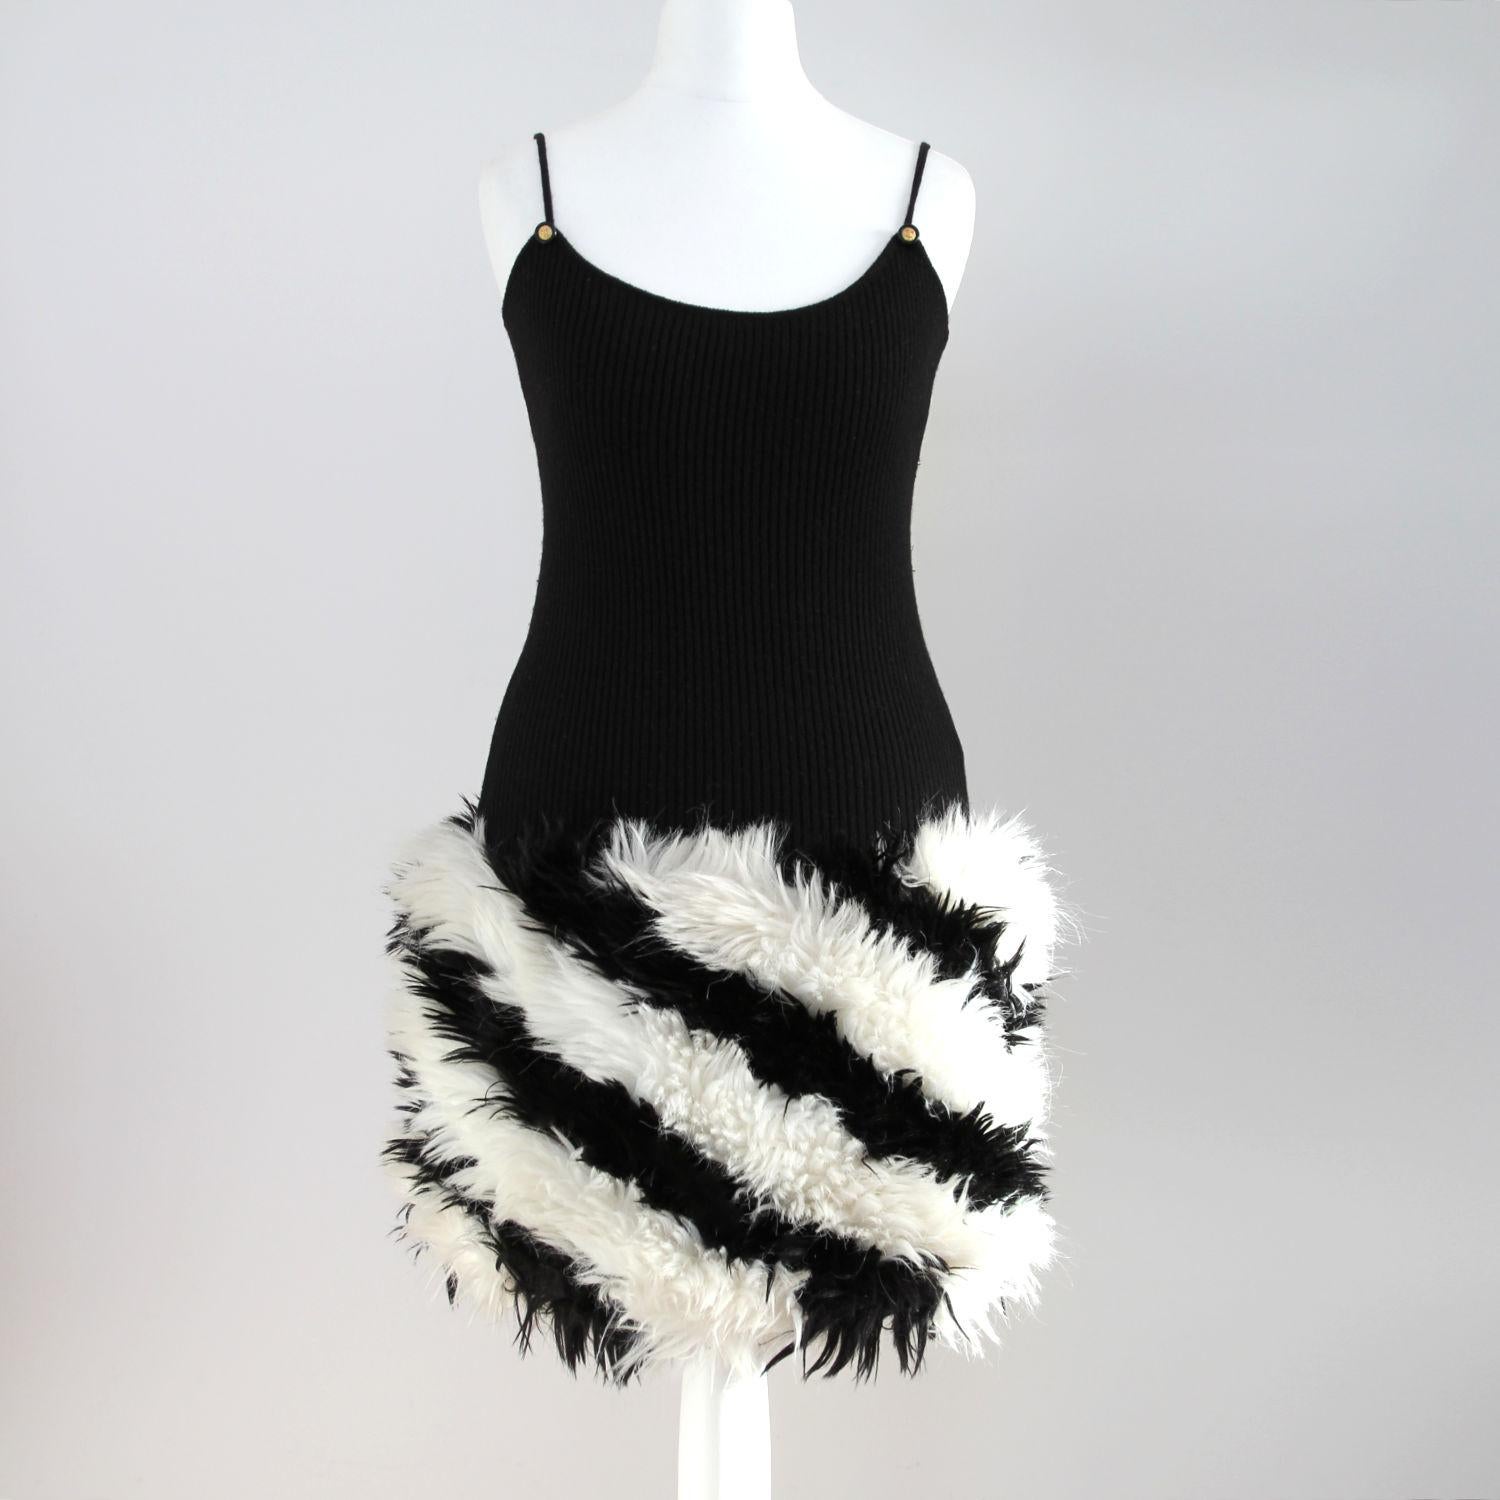 CHANEL 1994 Legendary Black & White Faux Fur Cashmere Dress by Karl Lagerfeld 4